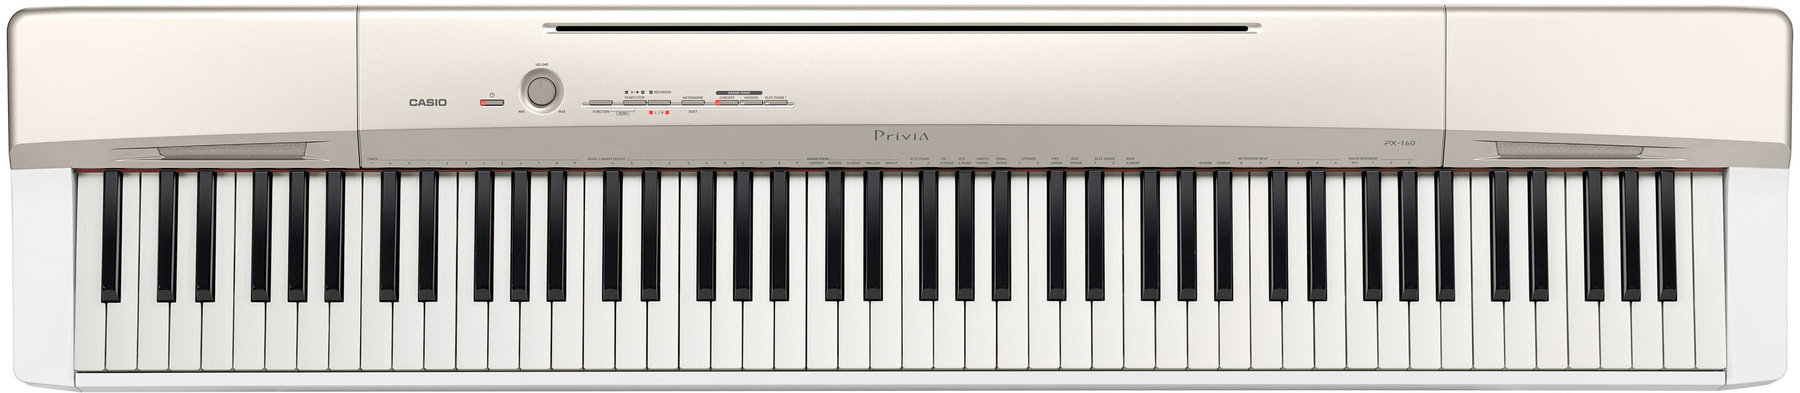 Piano de scène Casio PX-160GD Piano de scène